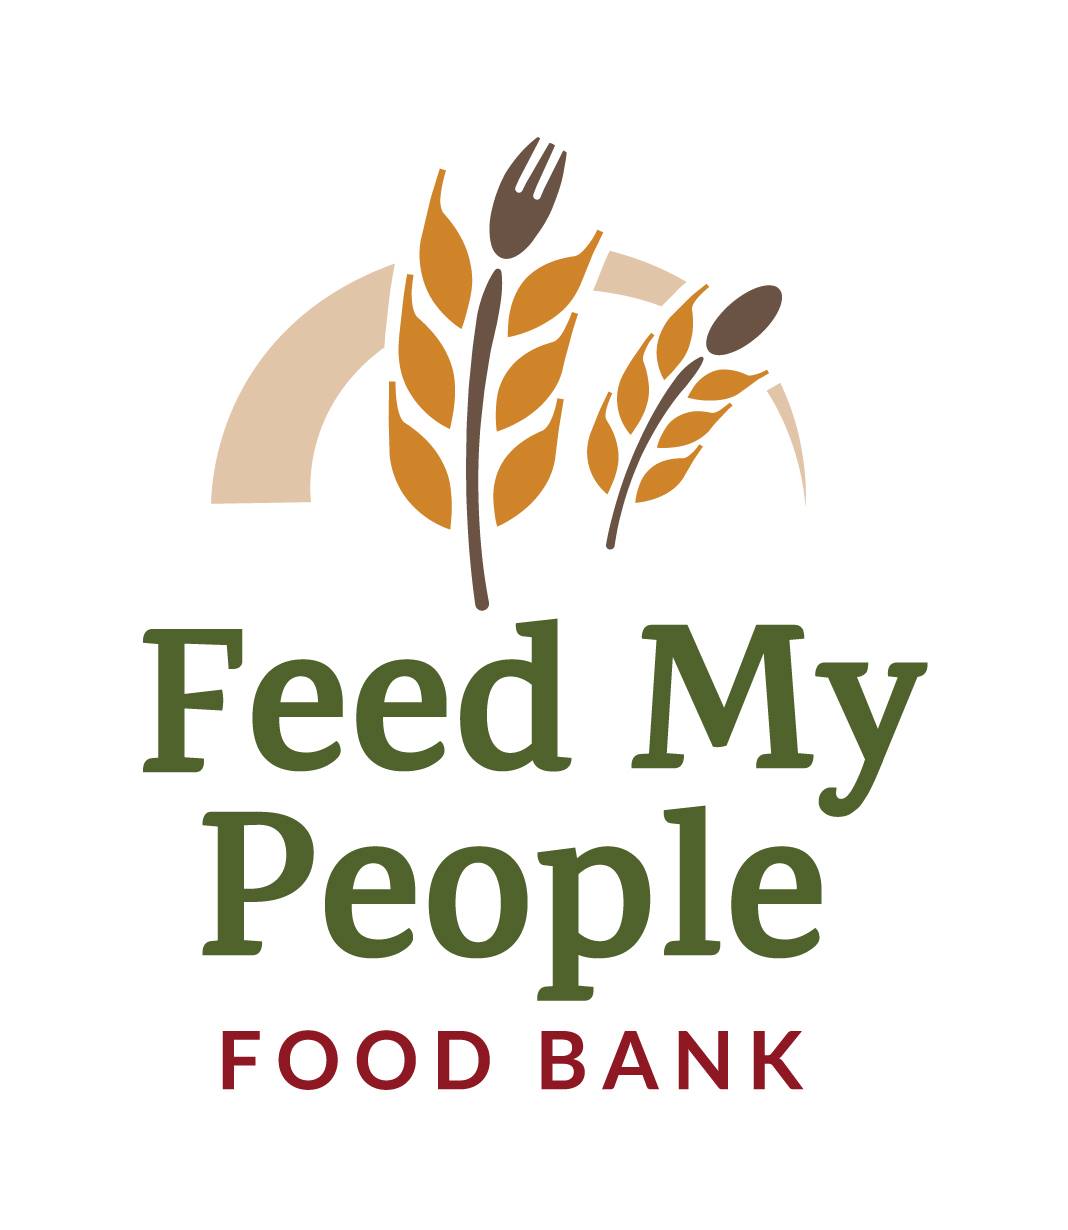 Feed My People Food Bank 